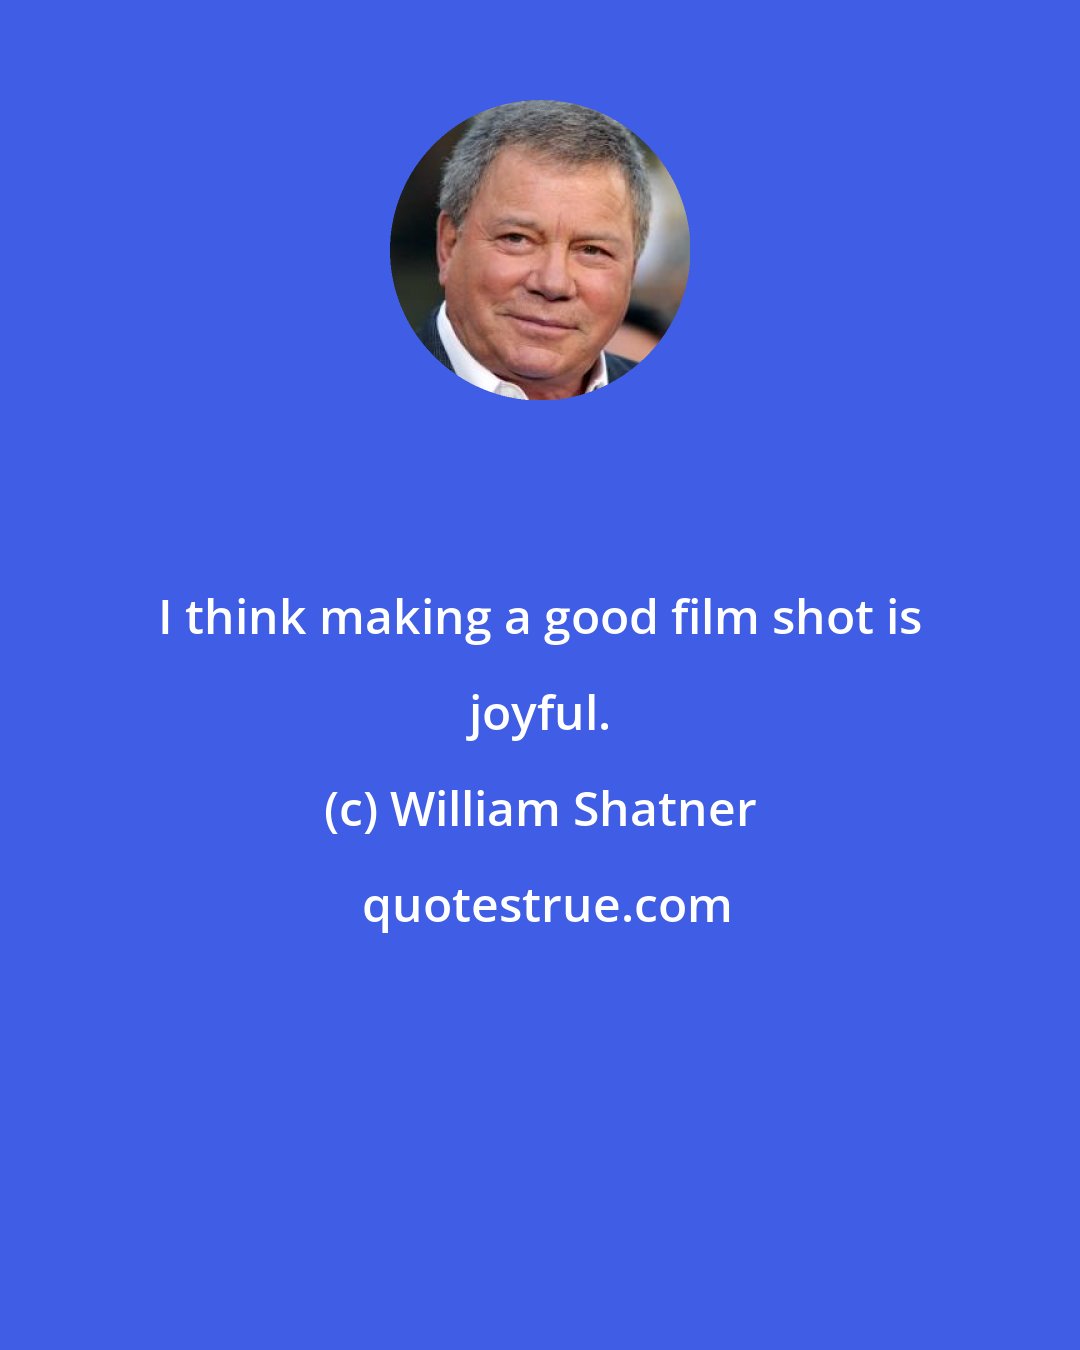 William Shatner: I think making a good film shot is joyful.